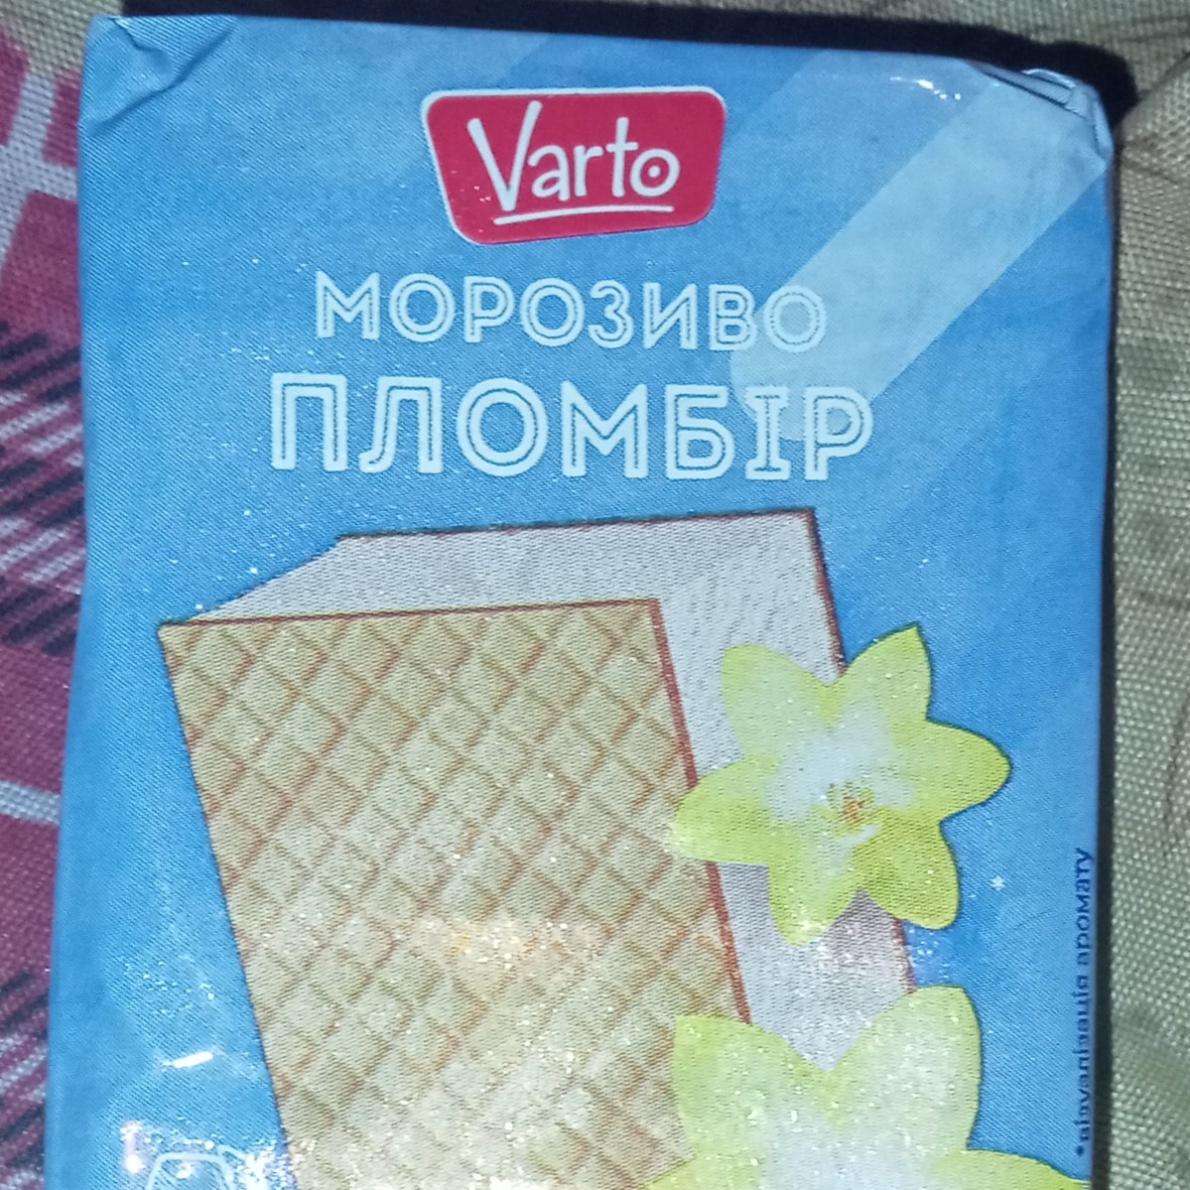 Фото - Мороженое 12% пломбир с ароматом ванили Varto